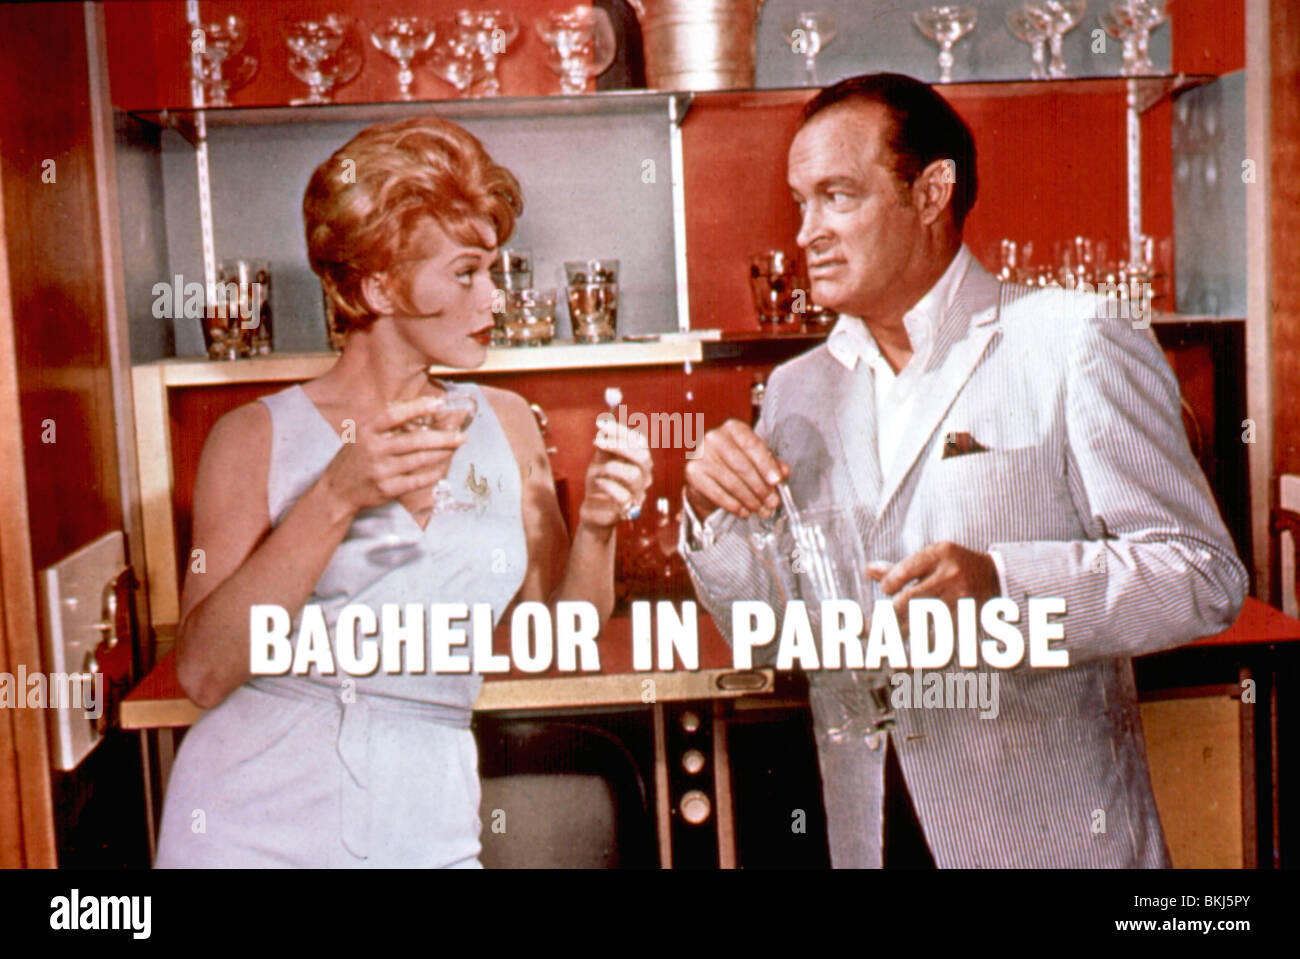 BACHELOR IN PARADISE (1961) LANA TURNER, BOB HOPE, JACK ARNOLD (DIR) BINP 001 Stock Photo